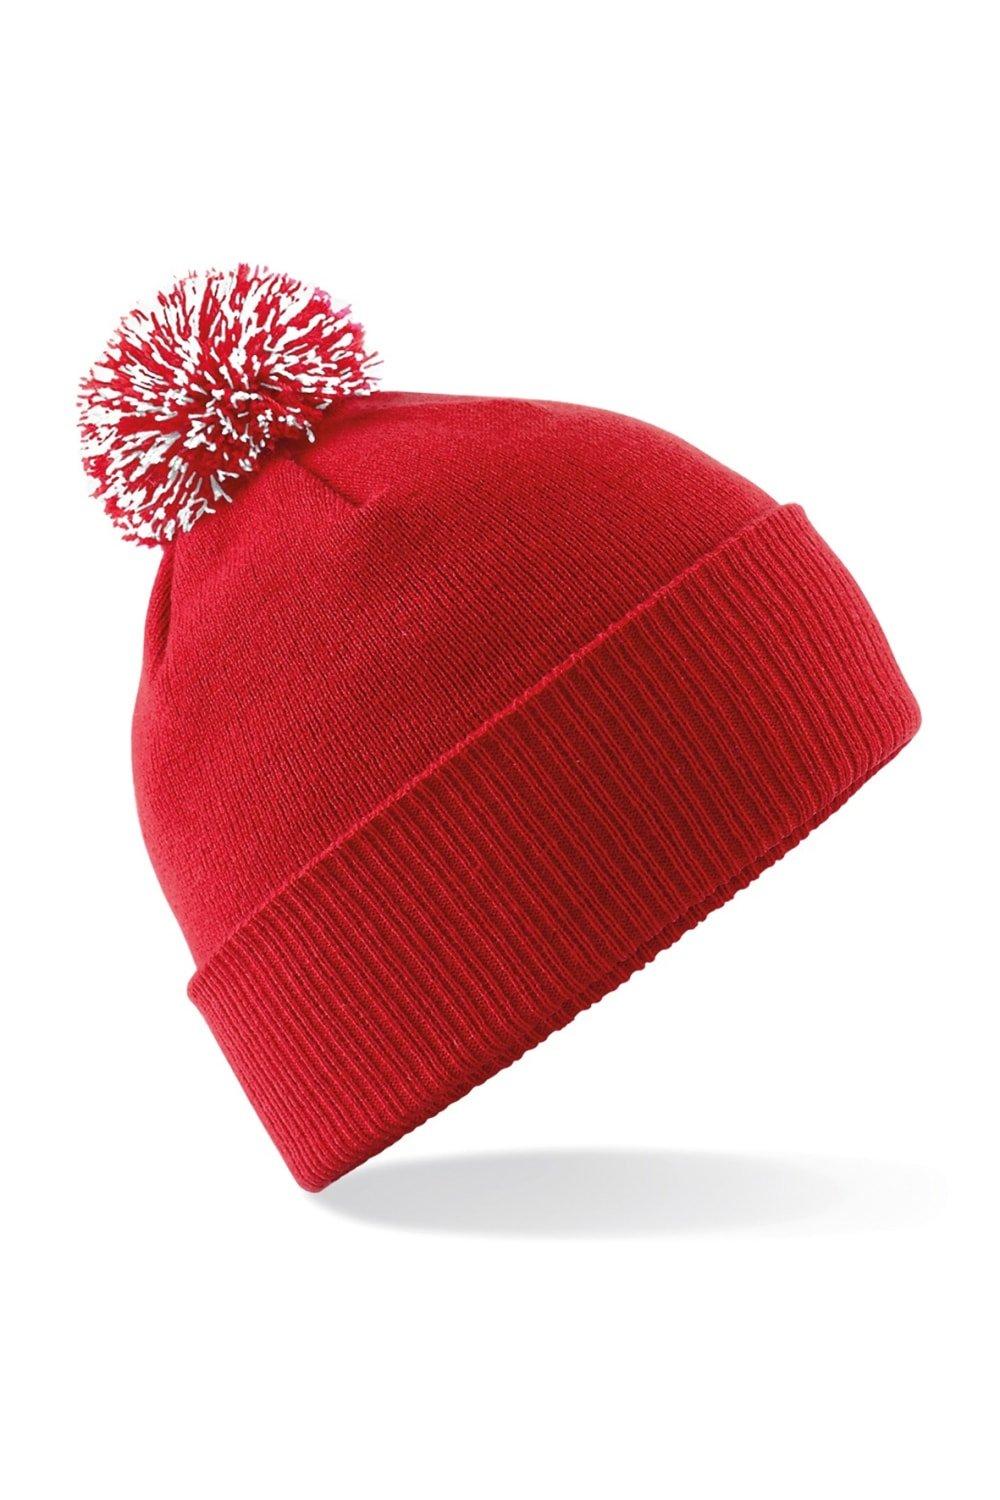 Зимняя шапка Snowstar Duo Extreme Beechfield, красный зимняя шапка snowstar duo extreme beechfield серый